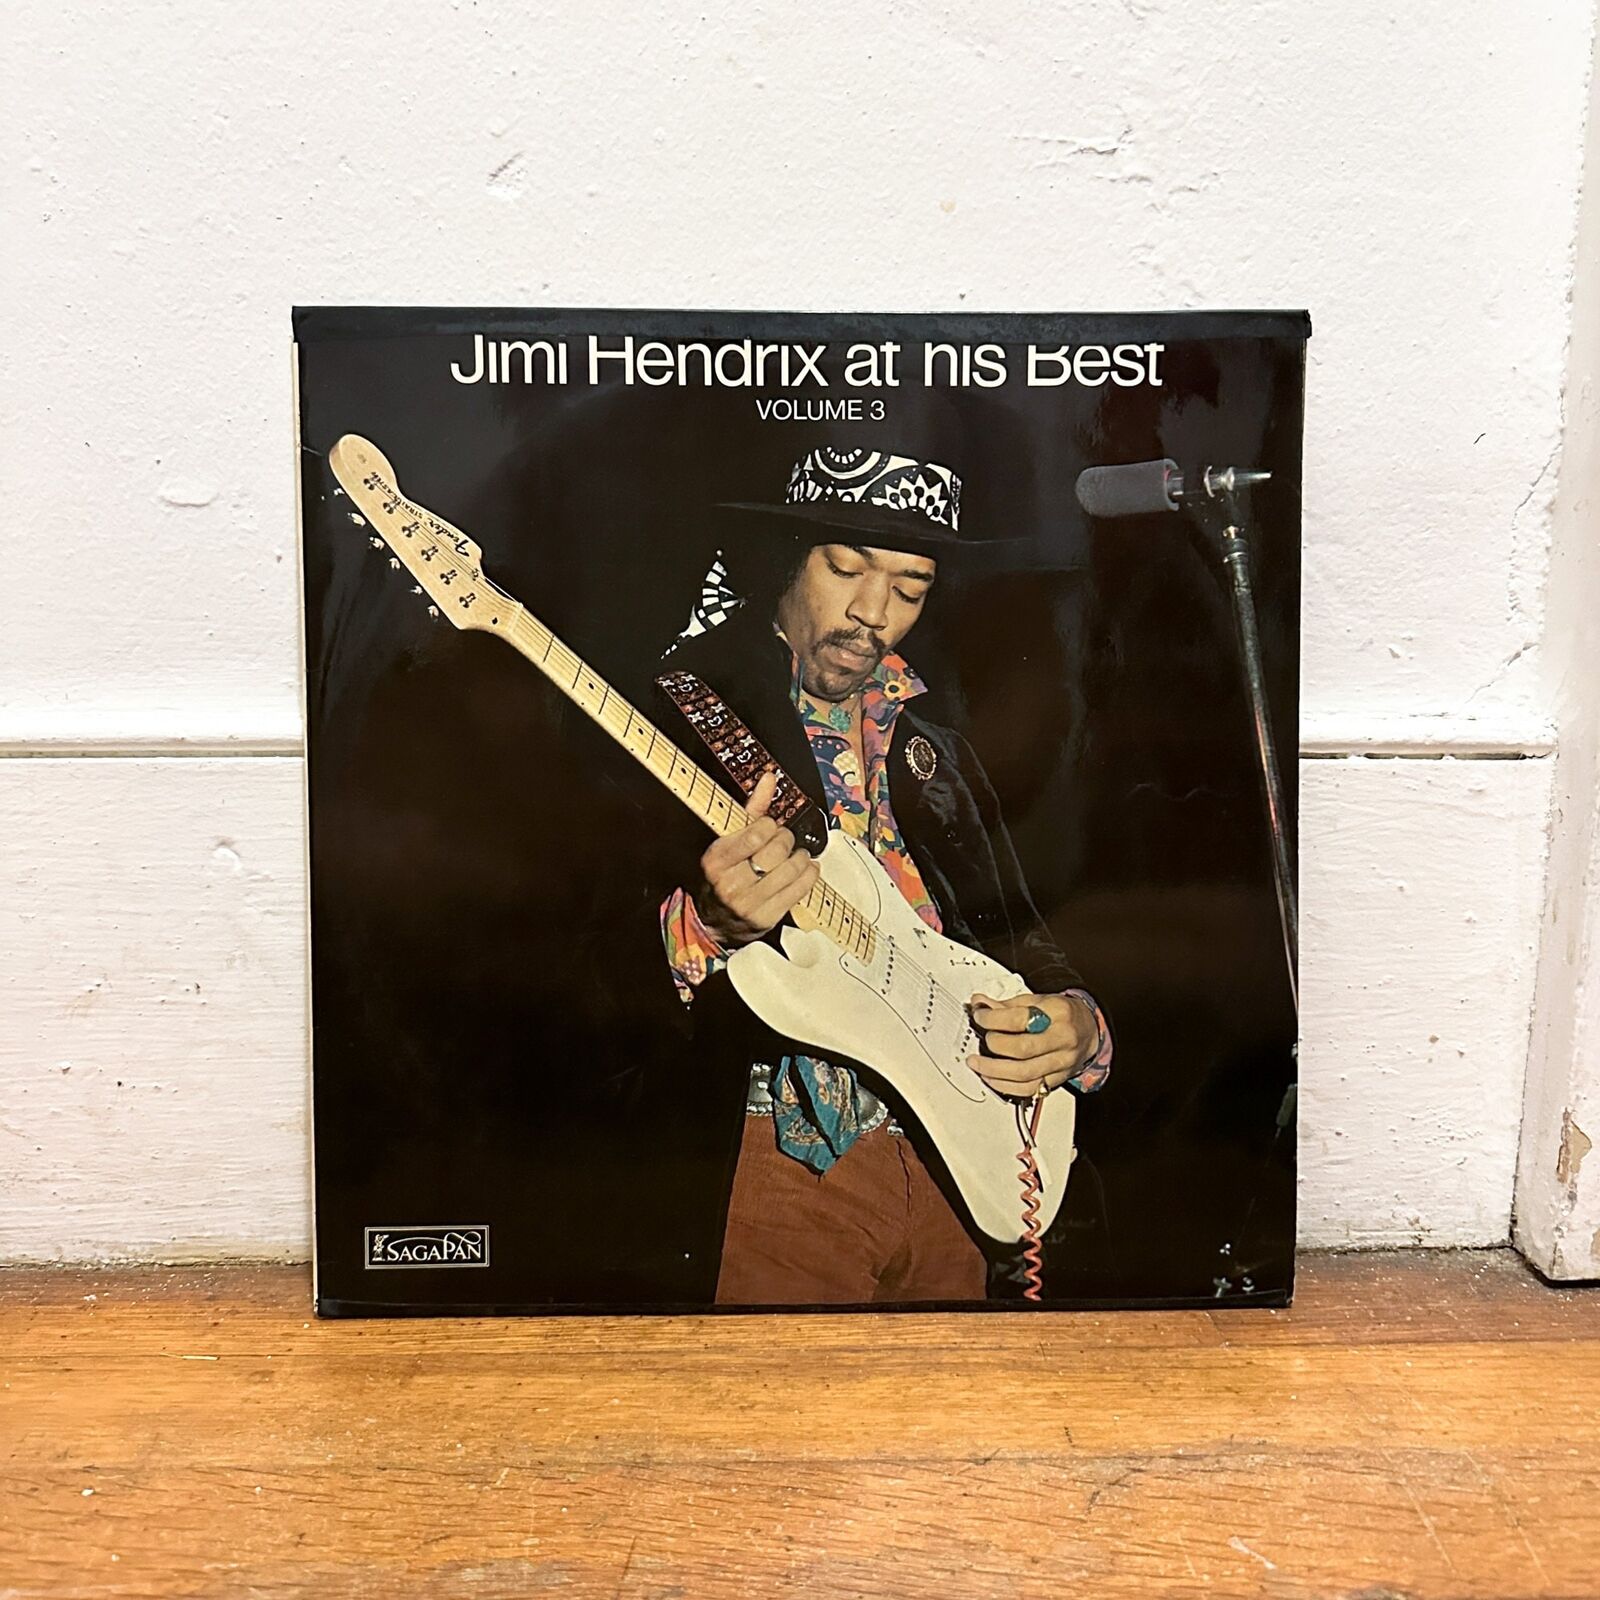 Jimi Hendrix At His Best (Volume 3) - Vinyl LP Record - 1972